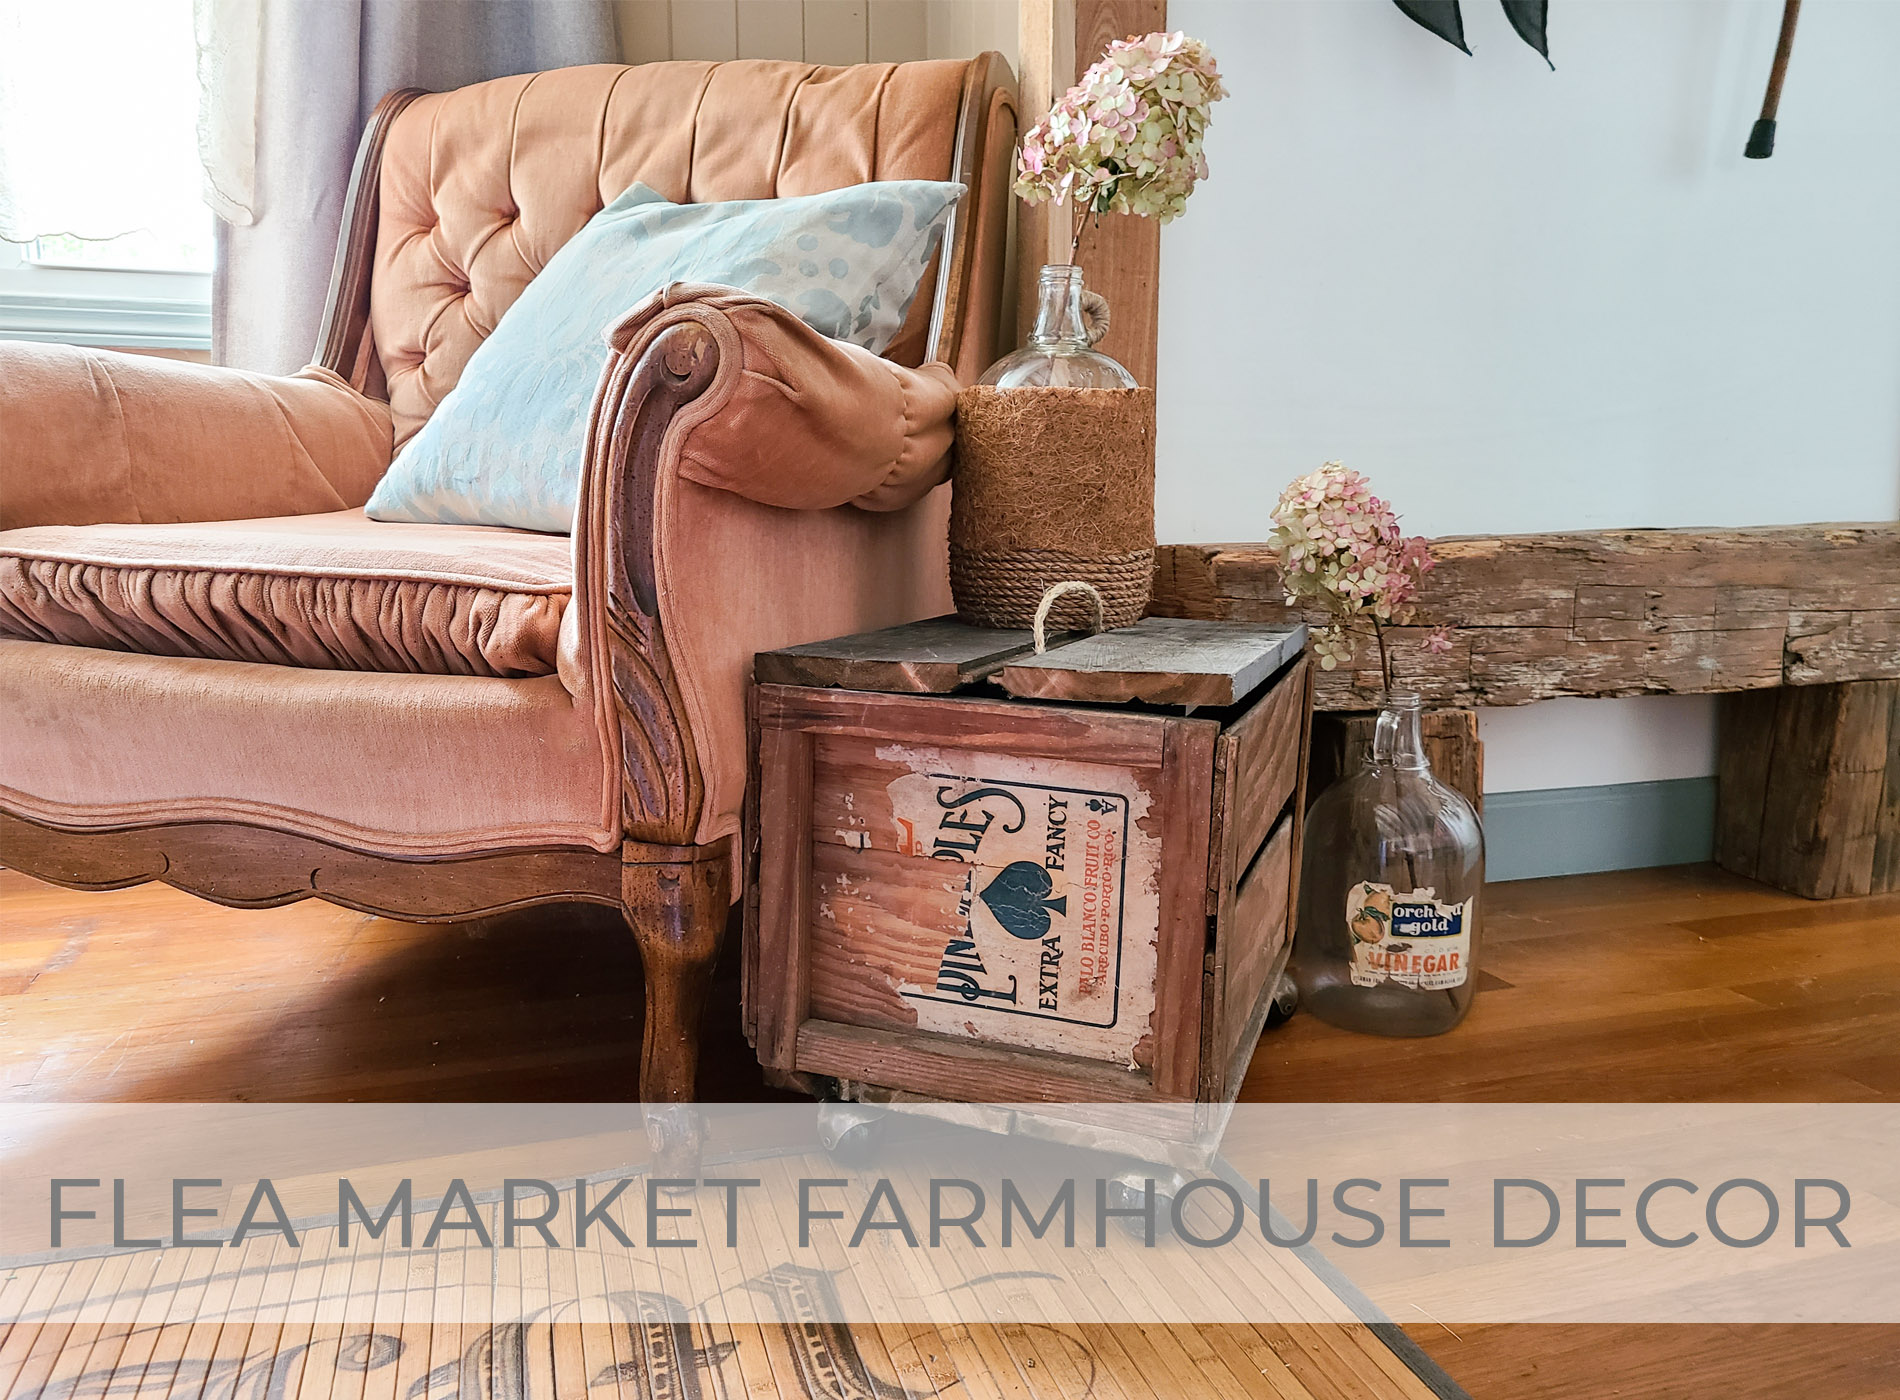 Flea Market Farmhouse Decor DIY Style by Larissa of Prodigal Pieces | prodigalpieces.com #prodigalpieces #farmhouse #home #diy #homedecor